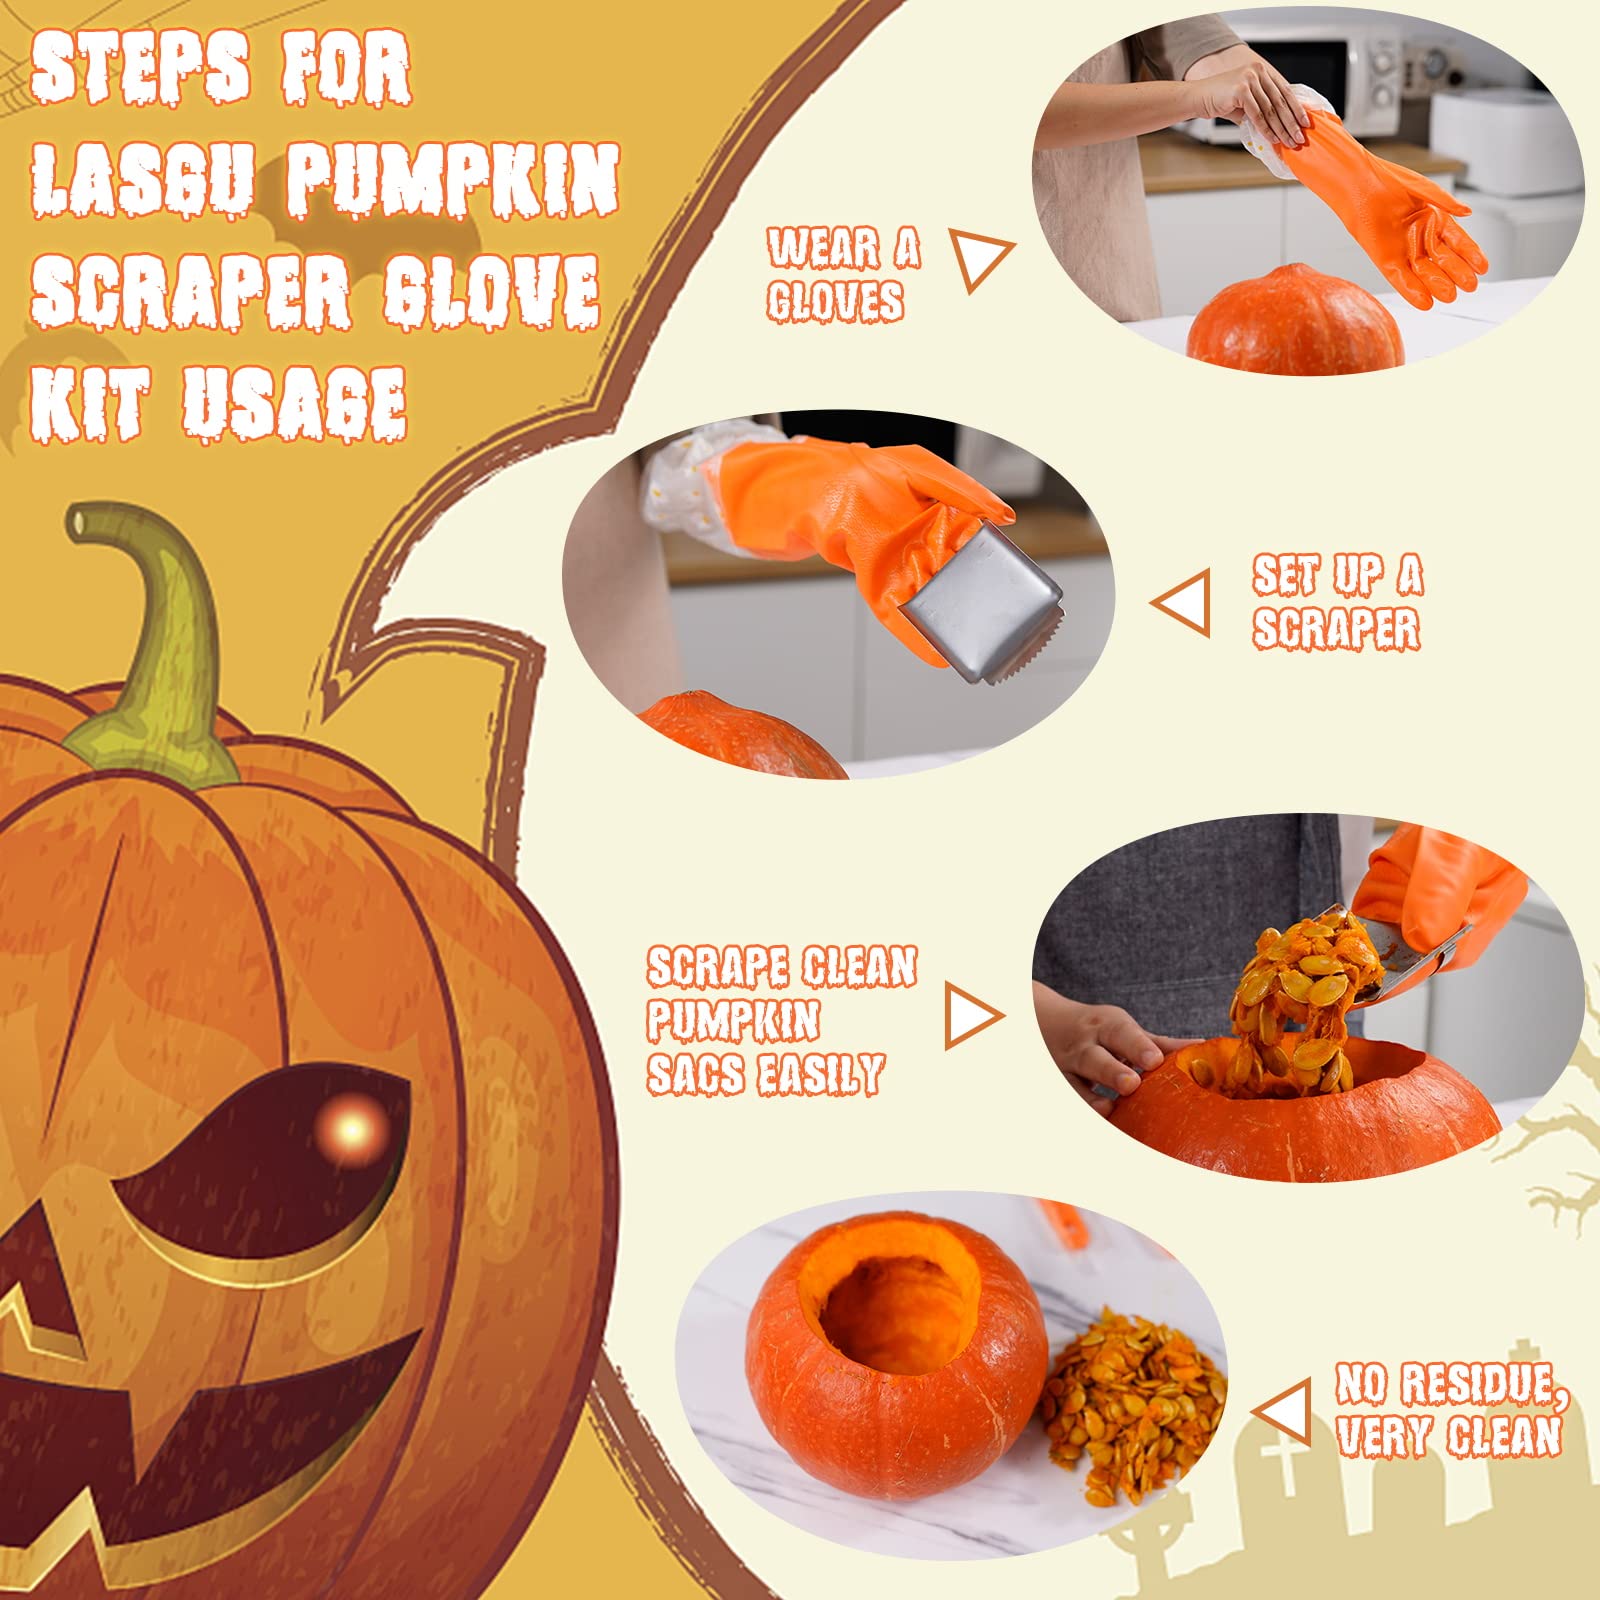 LASGU 2 Pcs Pumpkin Carving Scraper Glove Kit,Ergonomically Designed Pumpkin Carving Tool with 2 Pumpkin Scrapers Gloves & Pumpkin Knife for Halloween